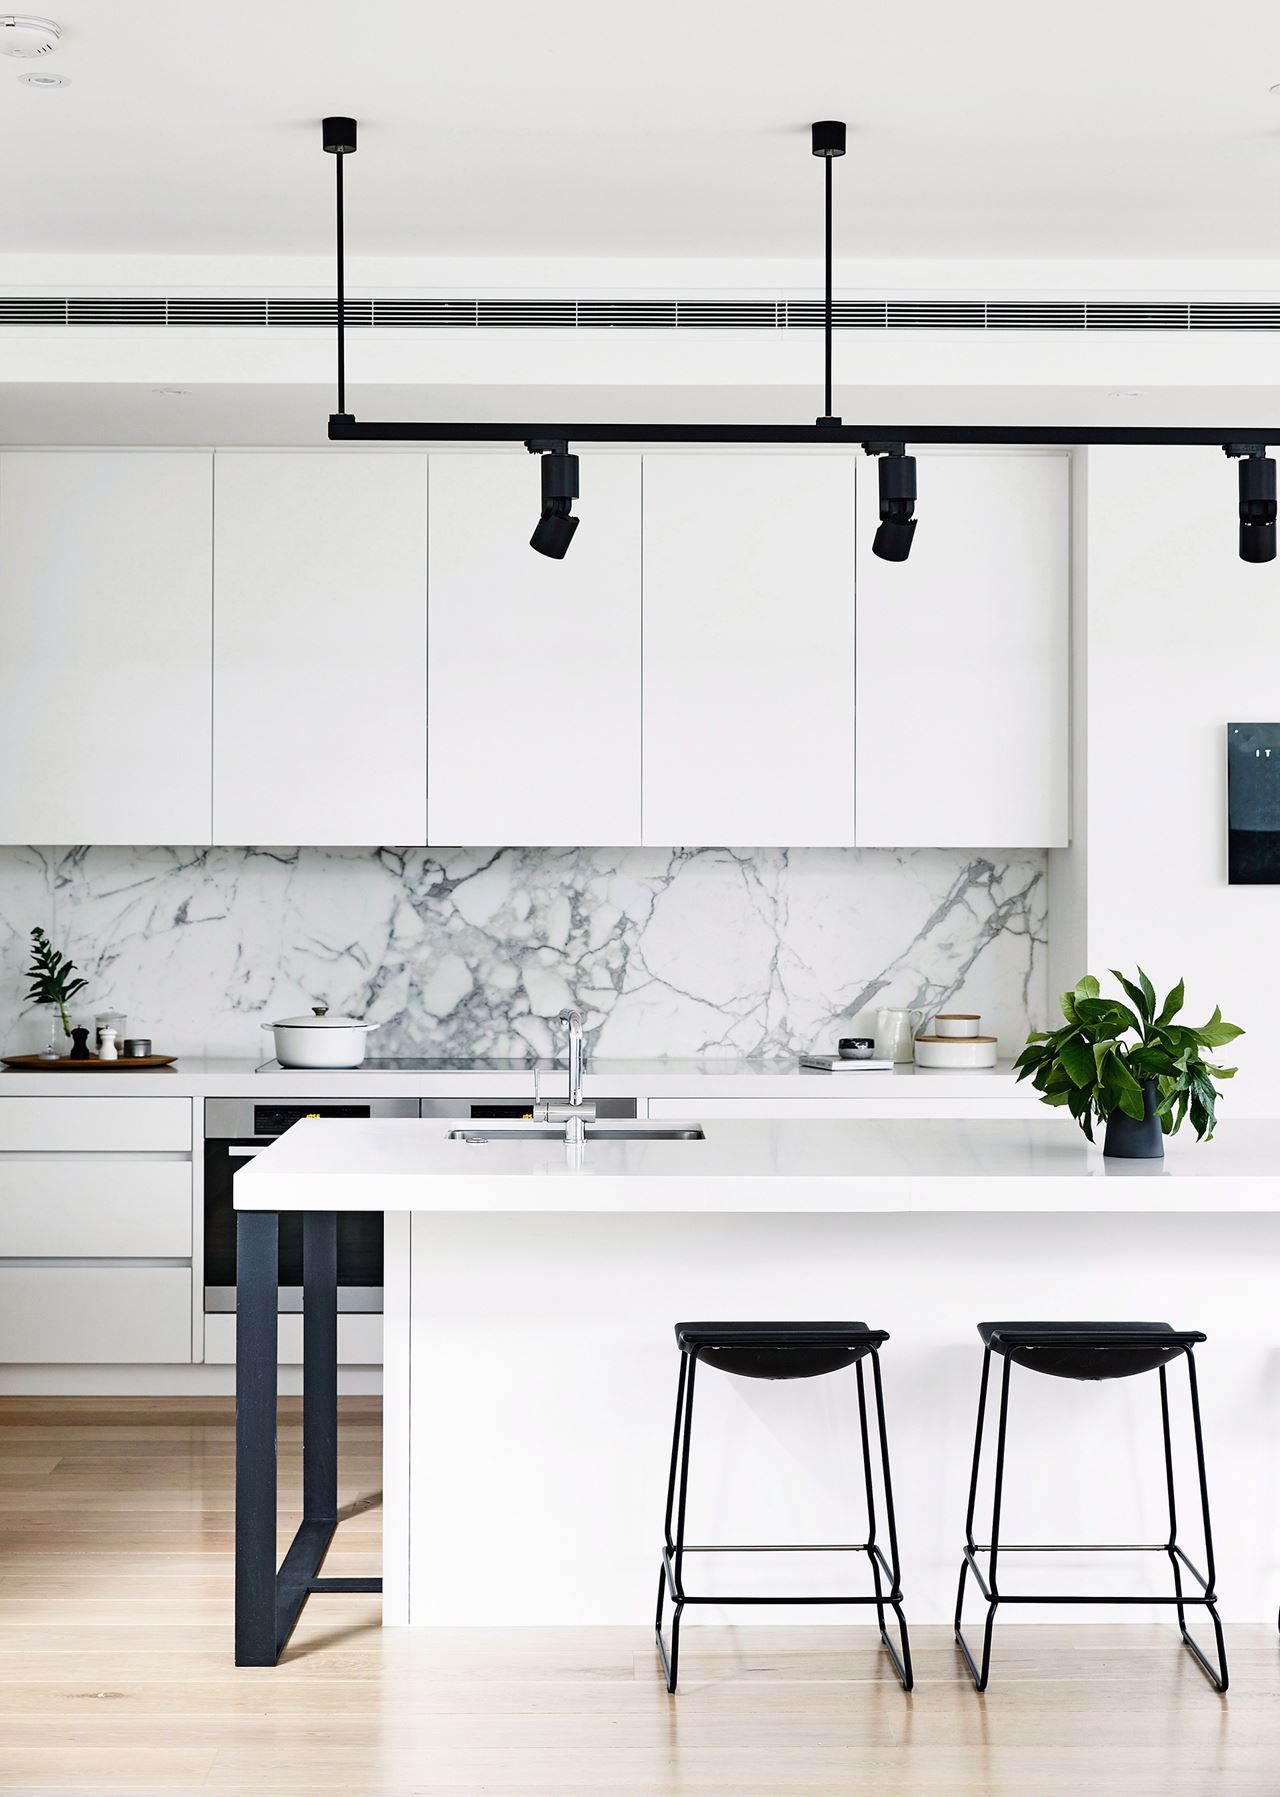 Black and white monochrome kitchen: handleless white cabinets and benchtops, grey marble splashback, black bar stools, black